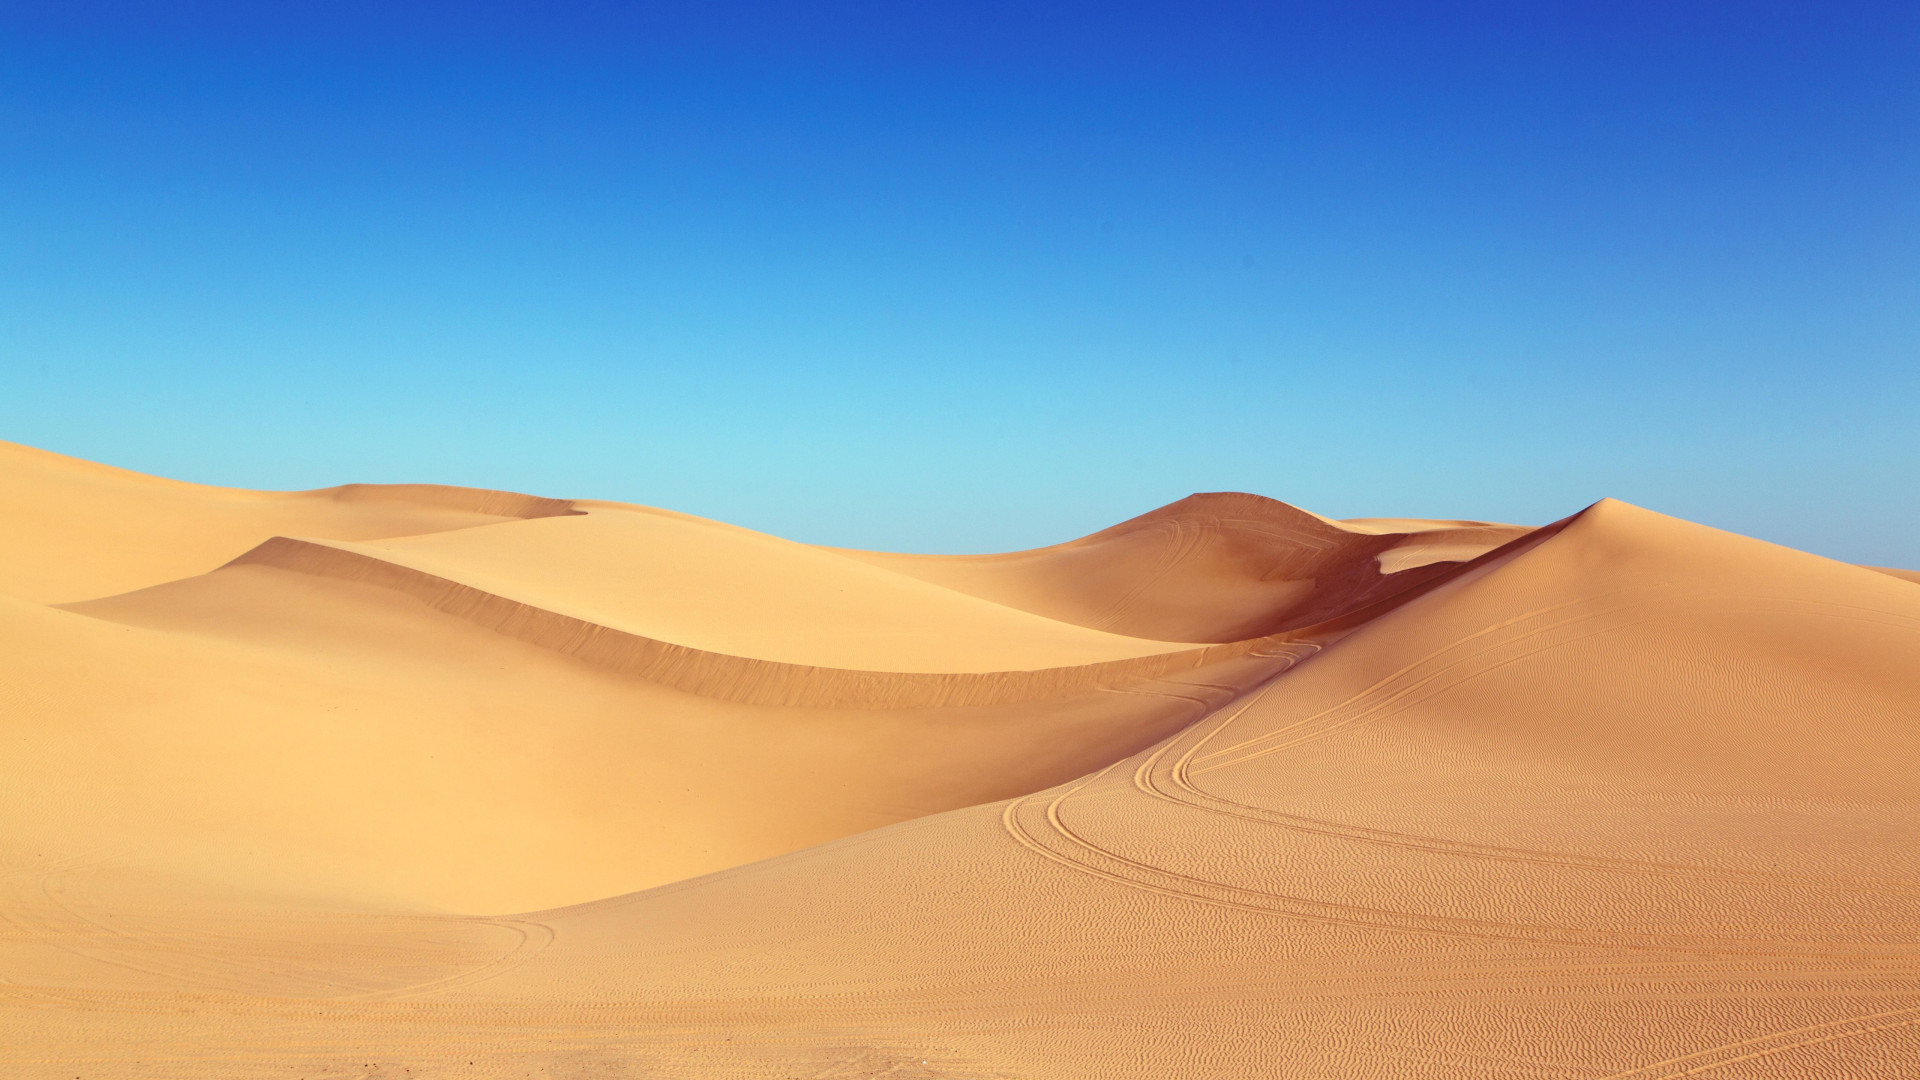 Blue sky and desert dunes wallpaper 1920x1080